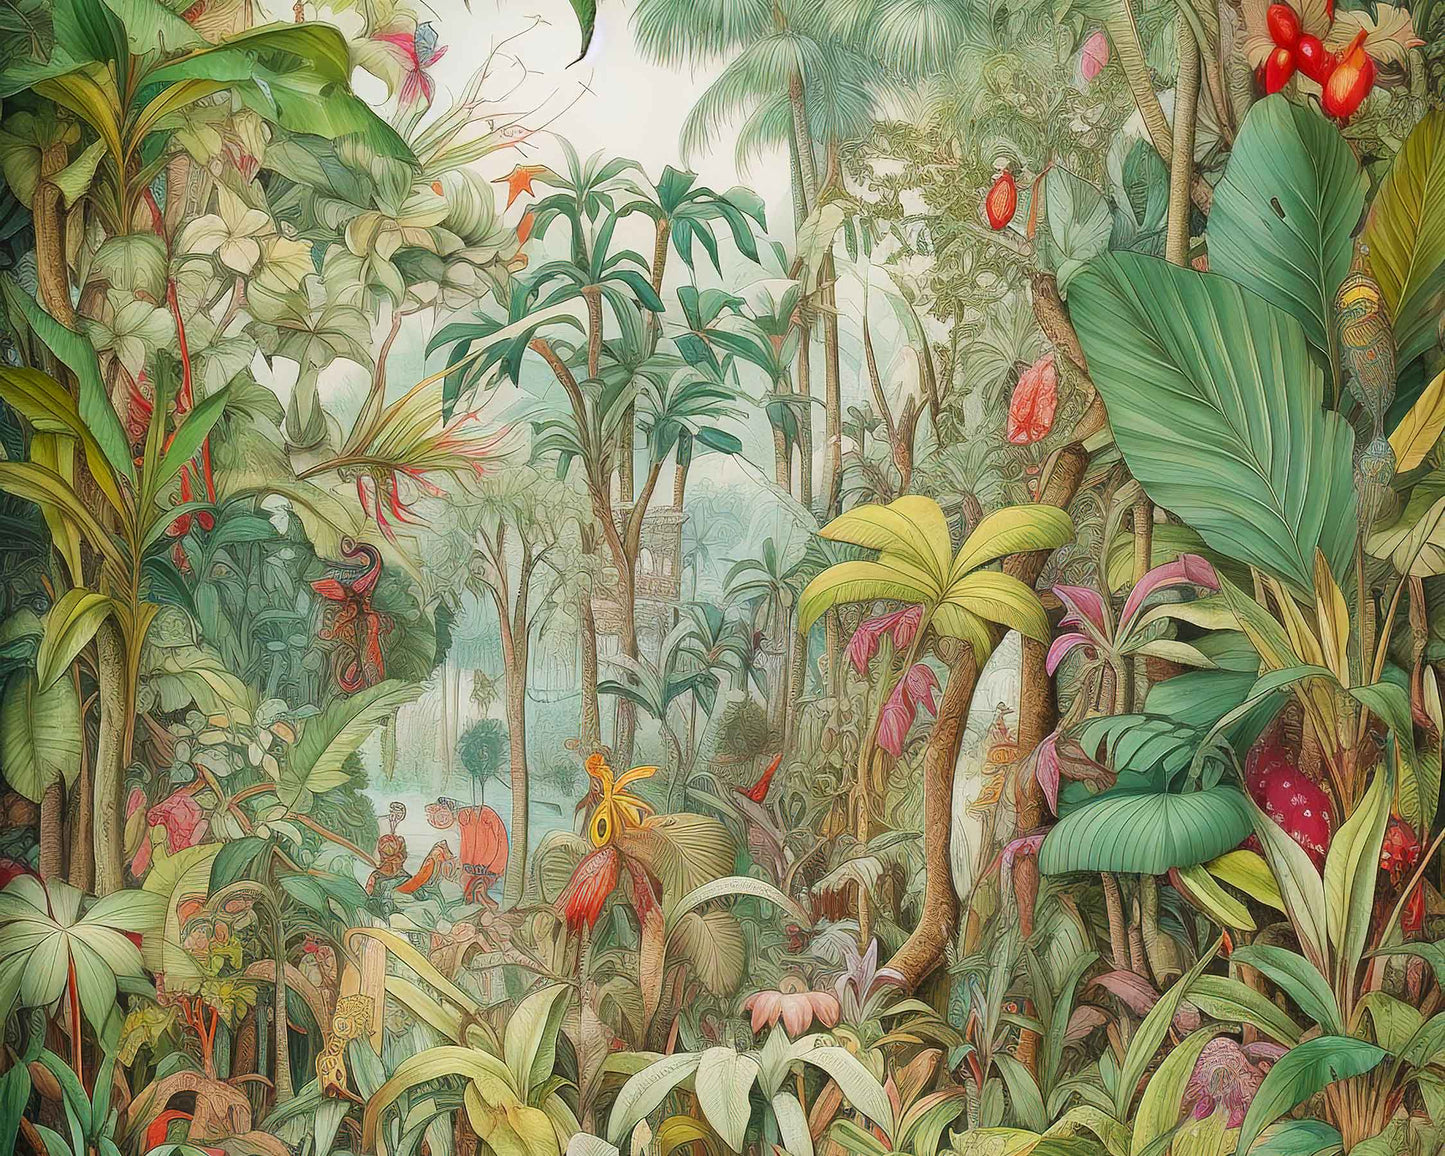 Framed Image of Vintage Jungle Victorian Botanical Wall Art, Maximalist Prints